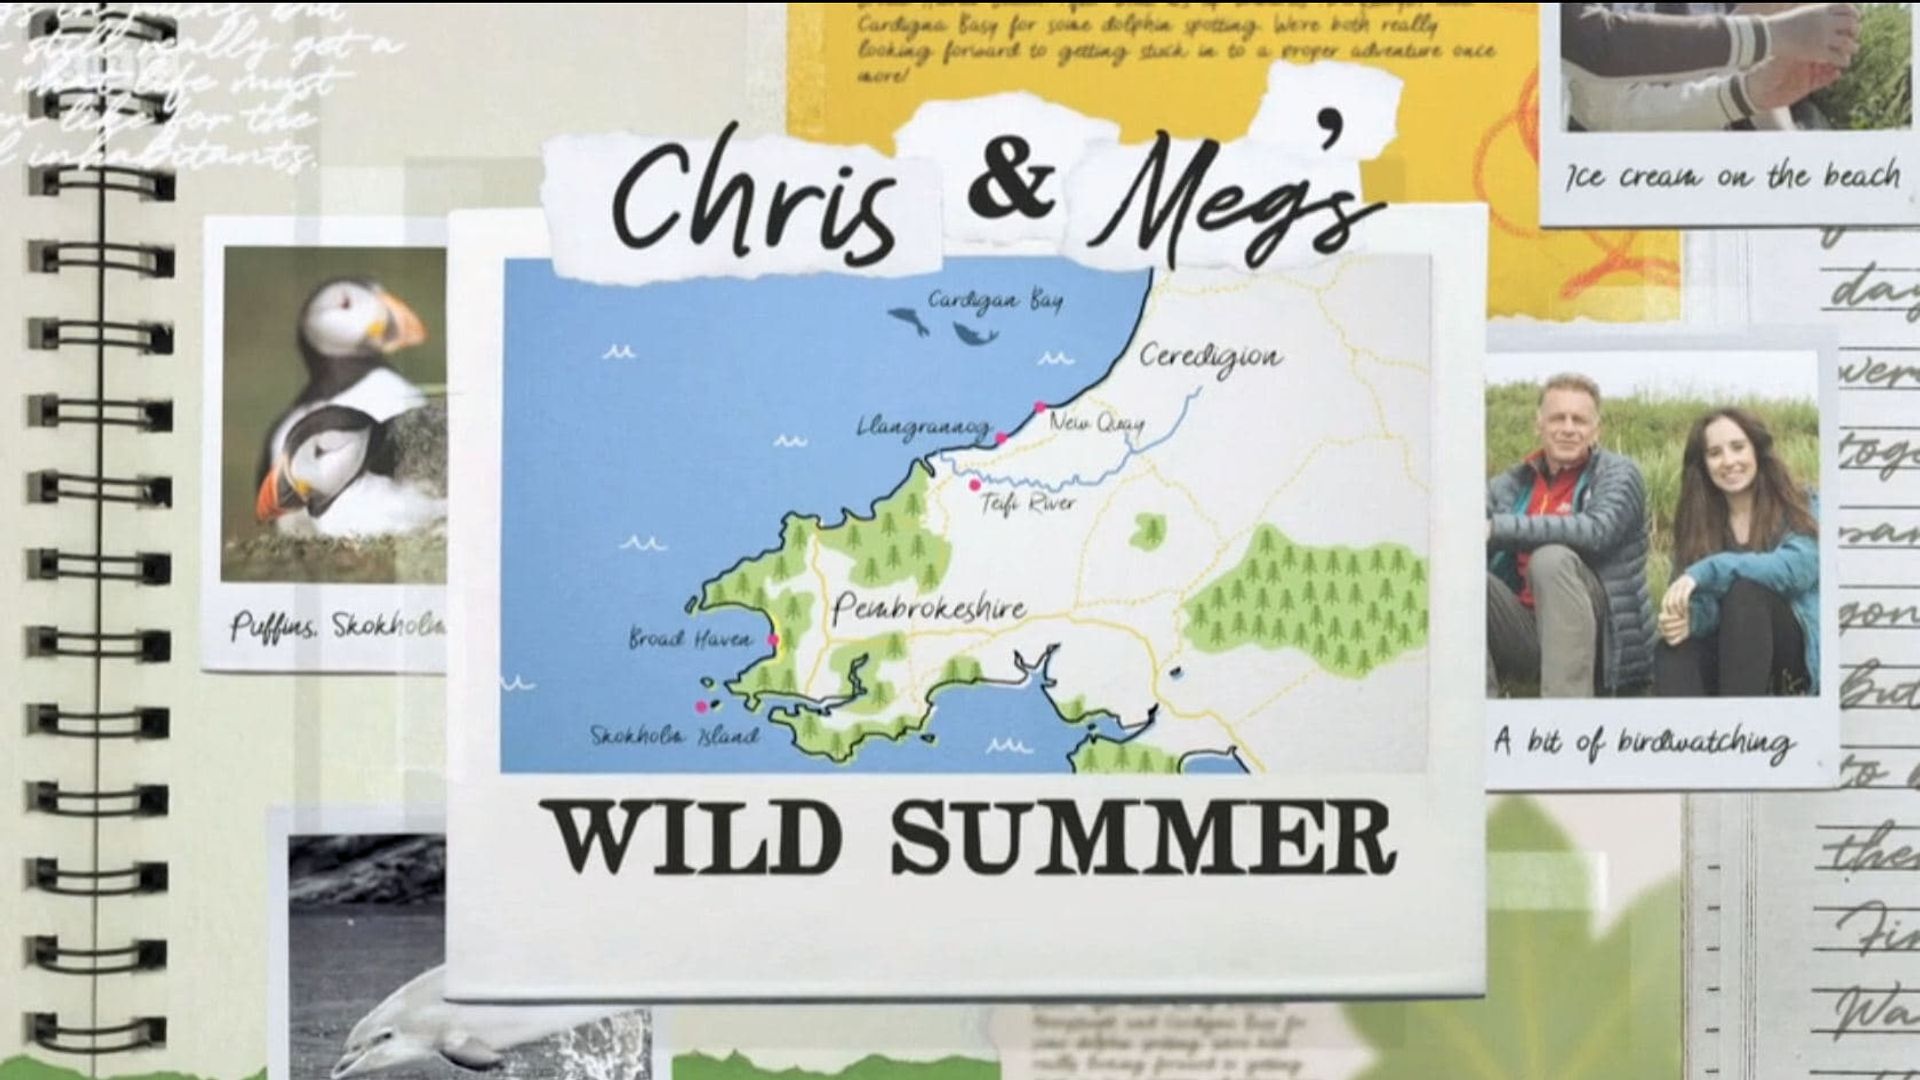 Chris and Meg's Wild Summer background